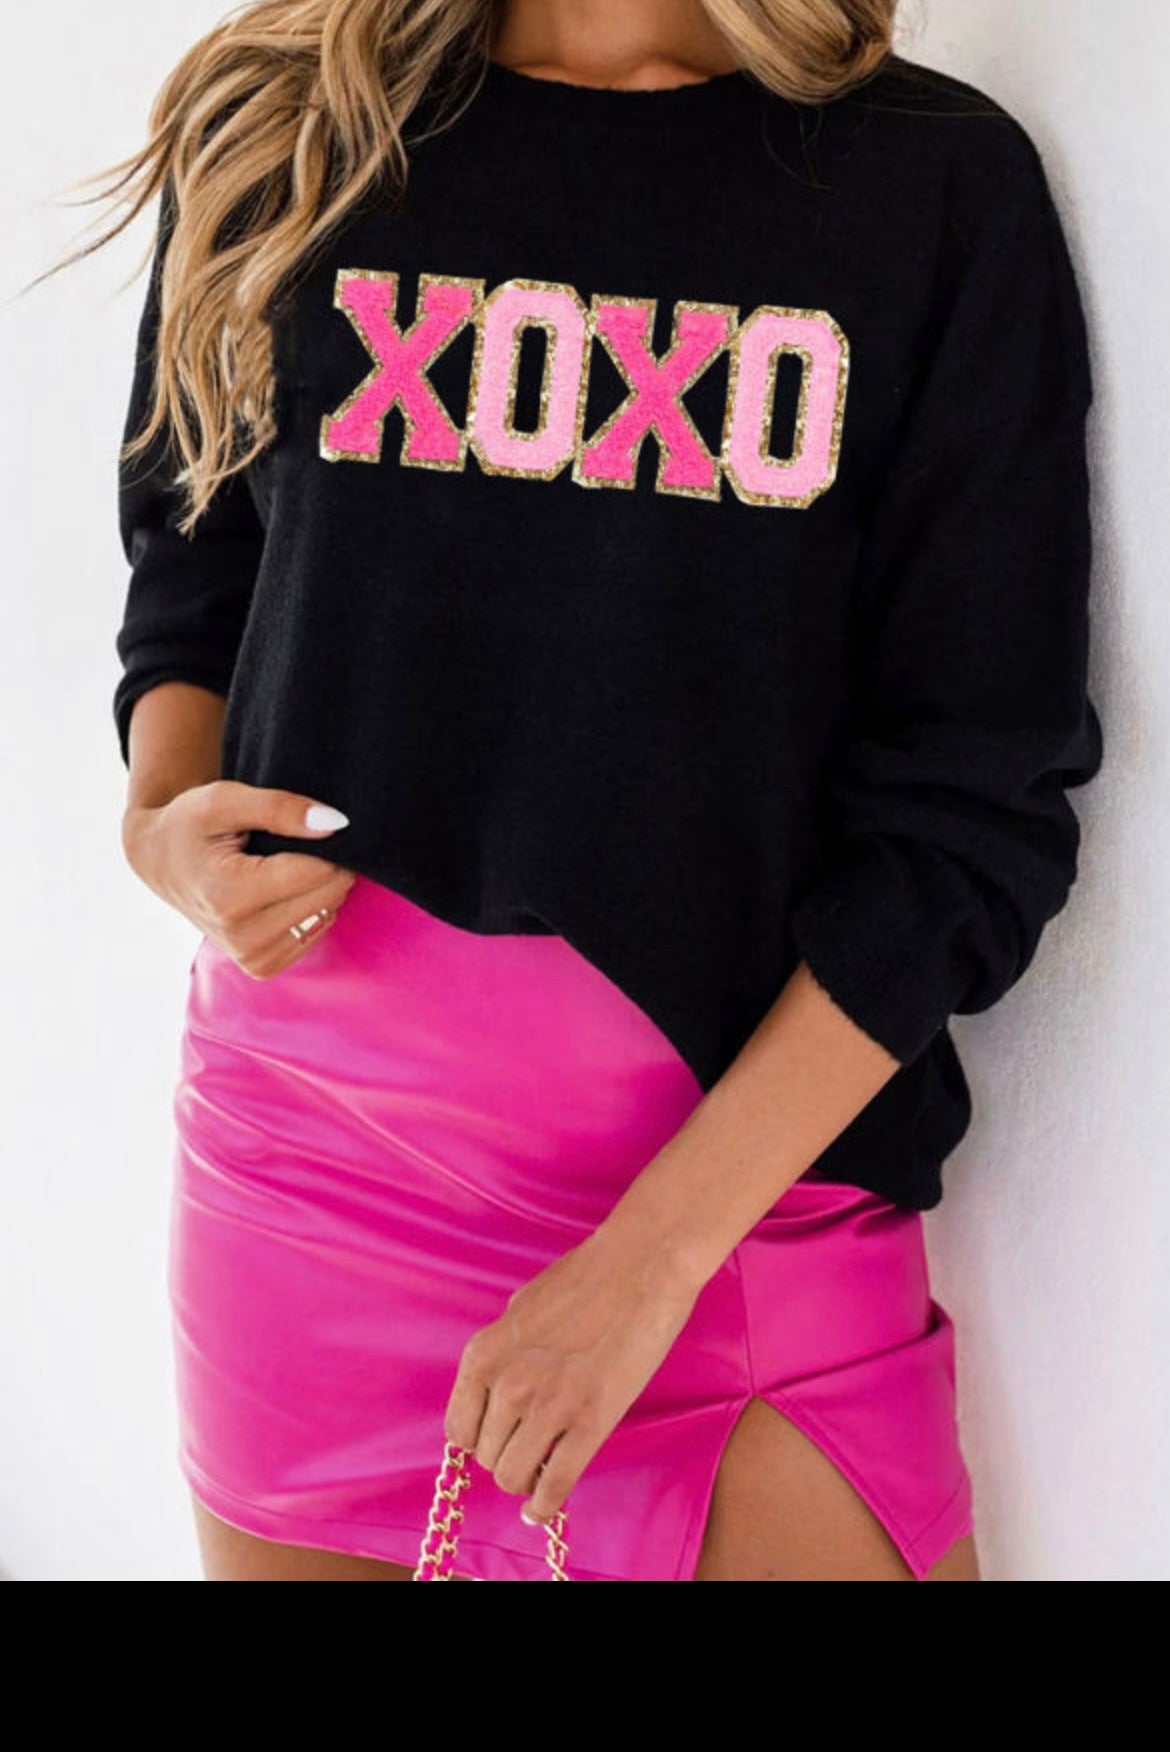 Xoxo sweater